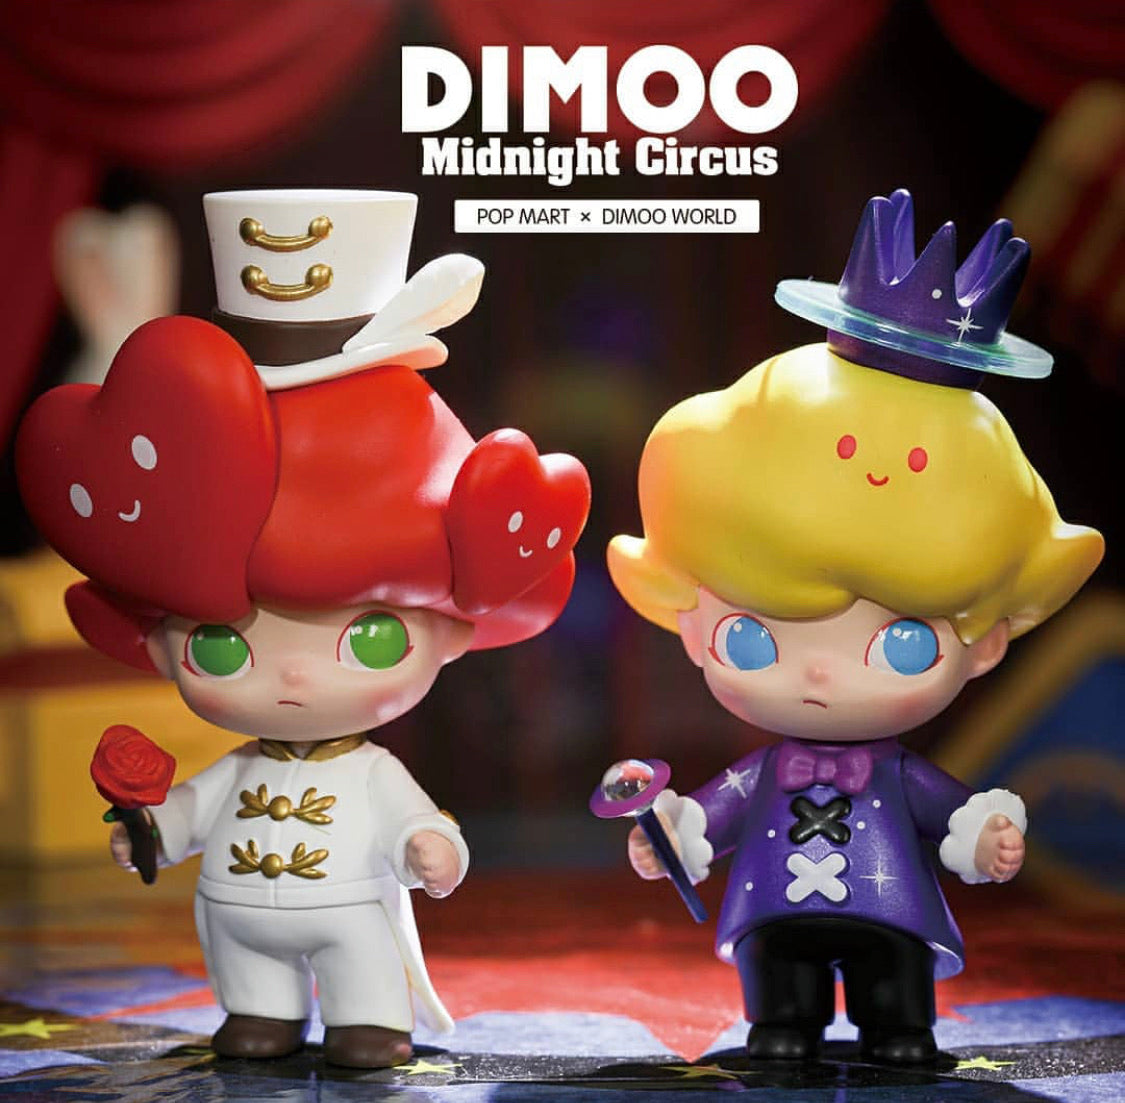 Dimoo Midnight Circus Mini Series by Ayan x Pop Mart